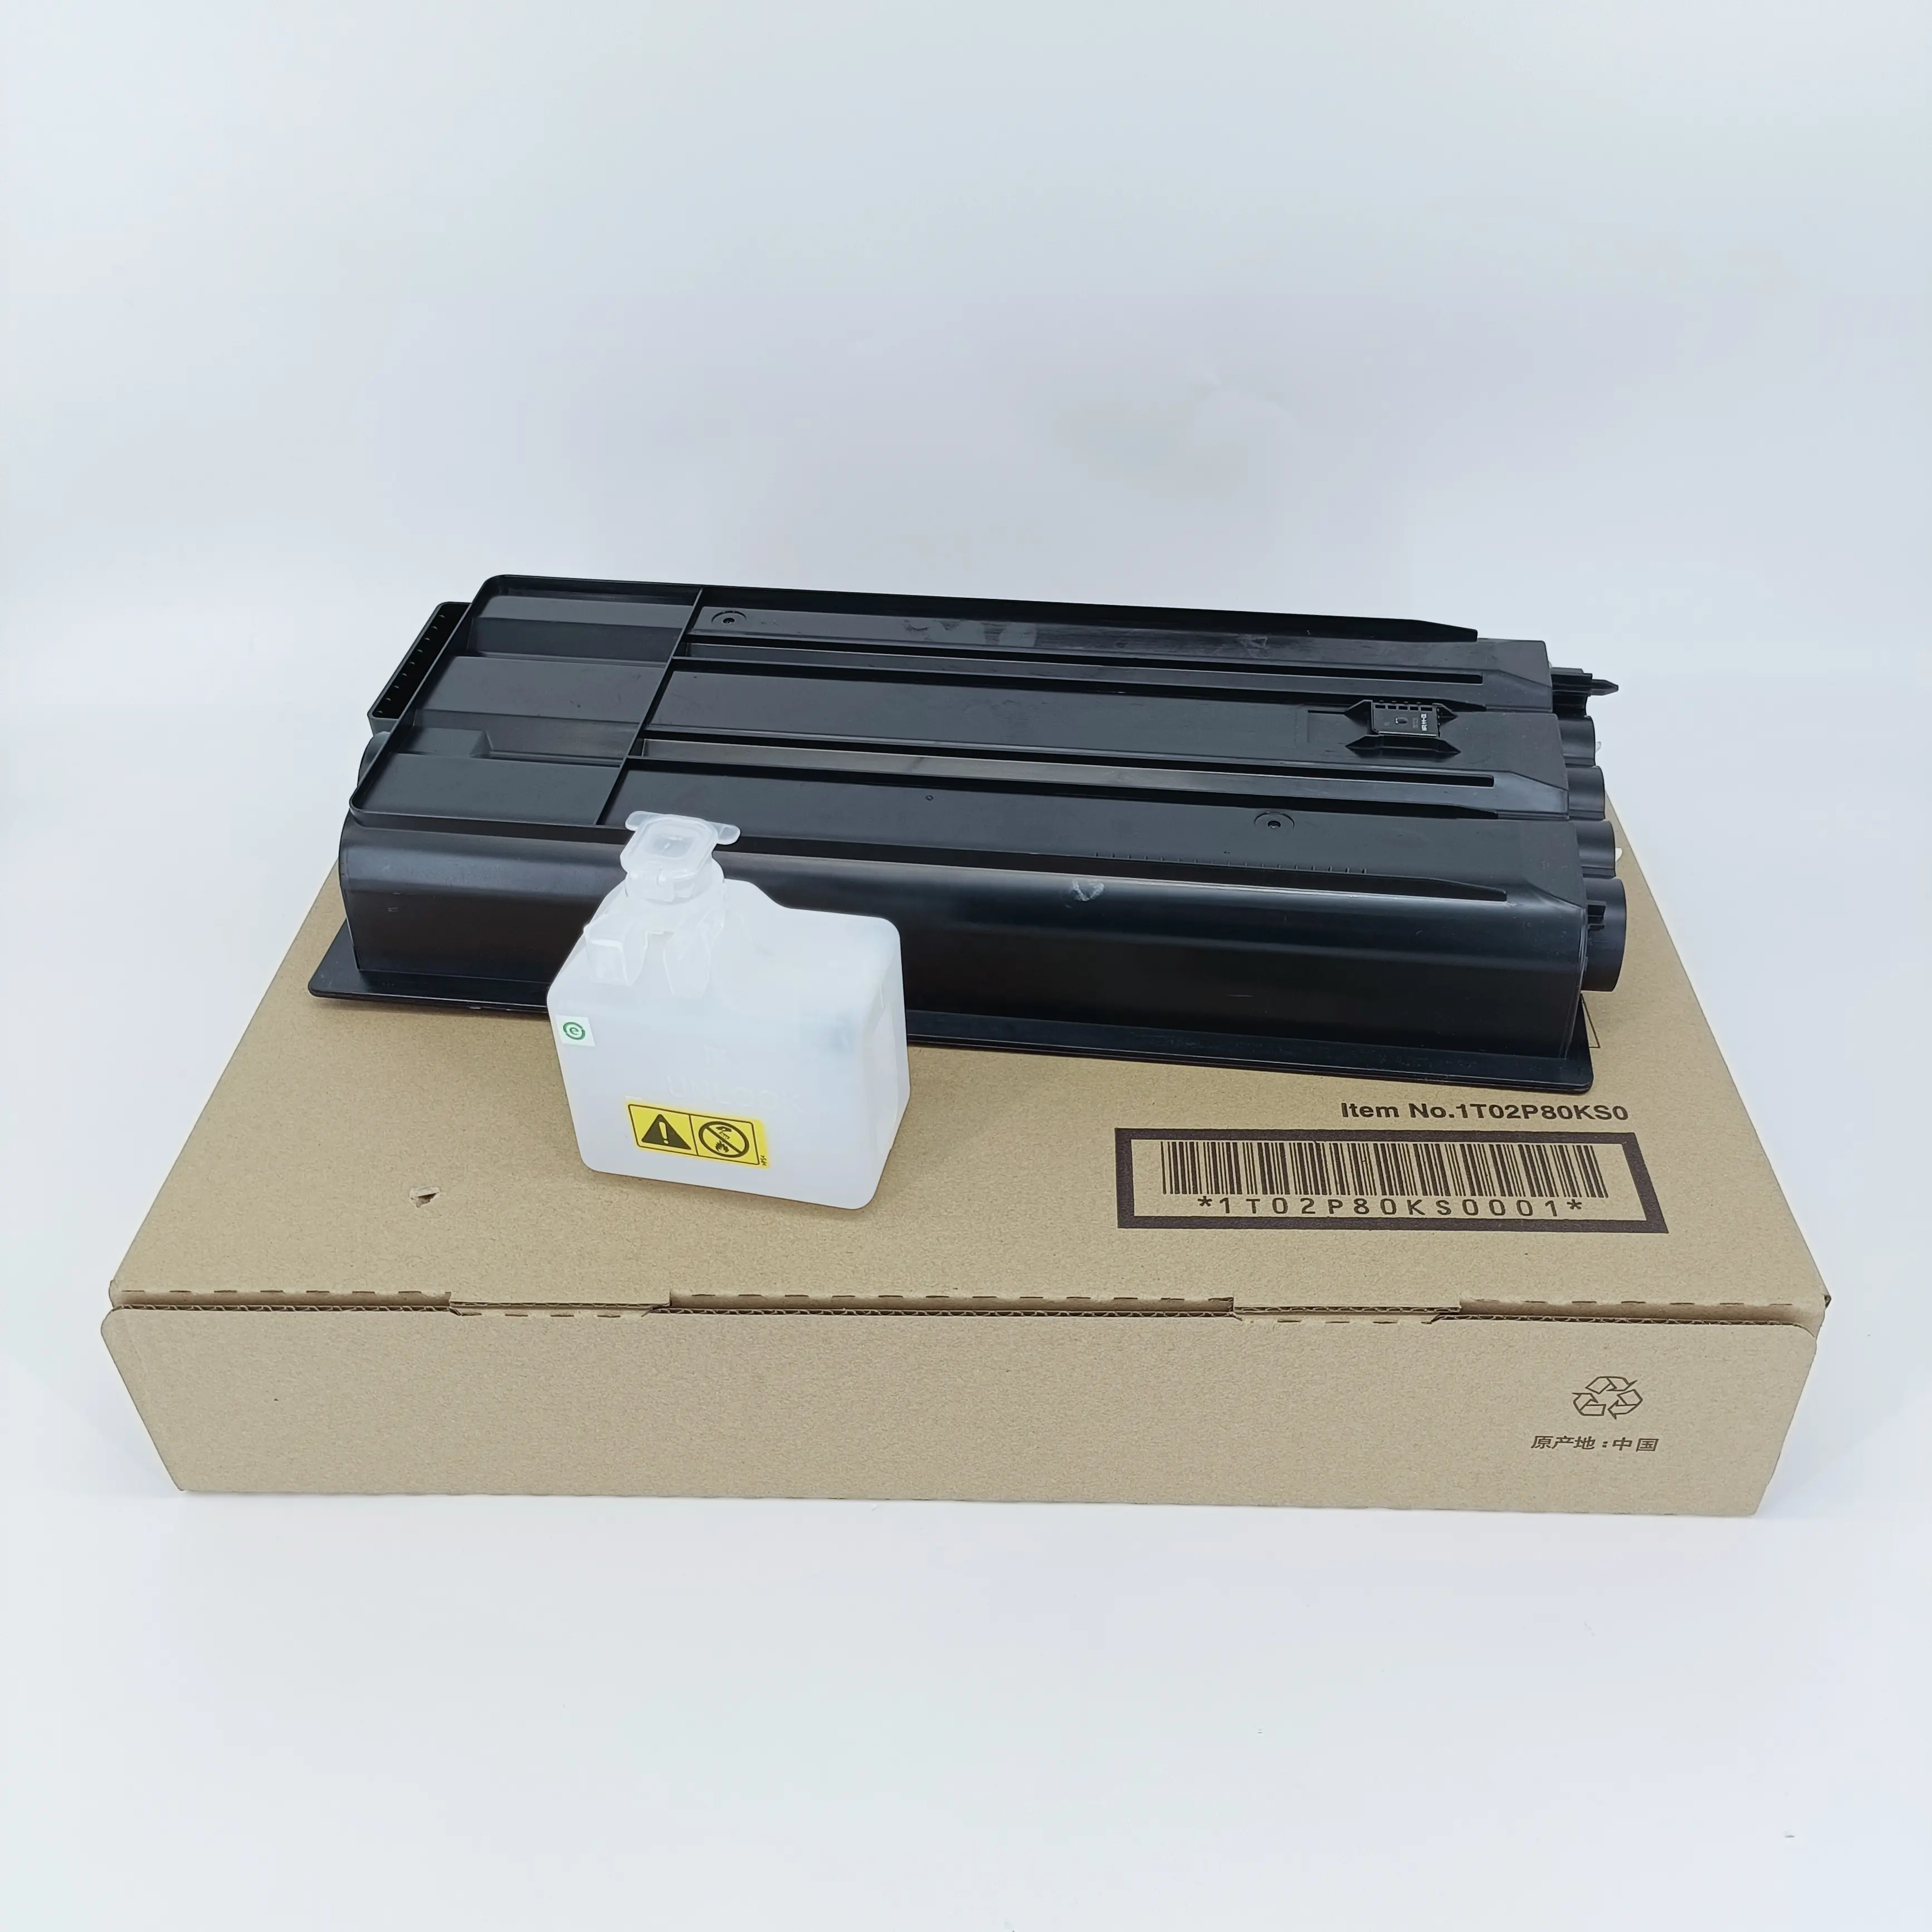 TK-7235 kompatibler Toner-Tonabnehmer-Kit für Kyocera Kopierer wesentliche Produktkategorie Toner-Tonabnehmer